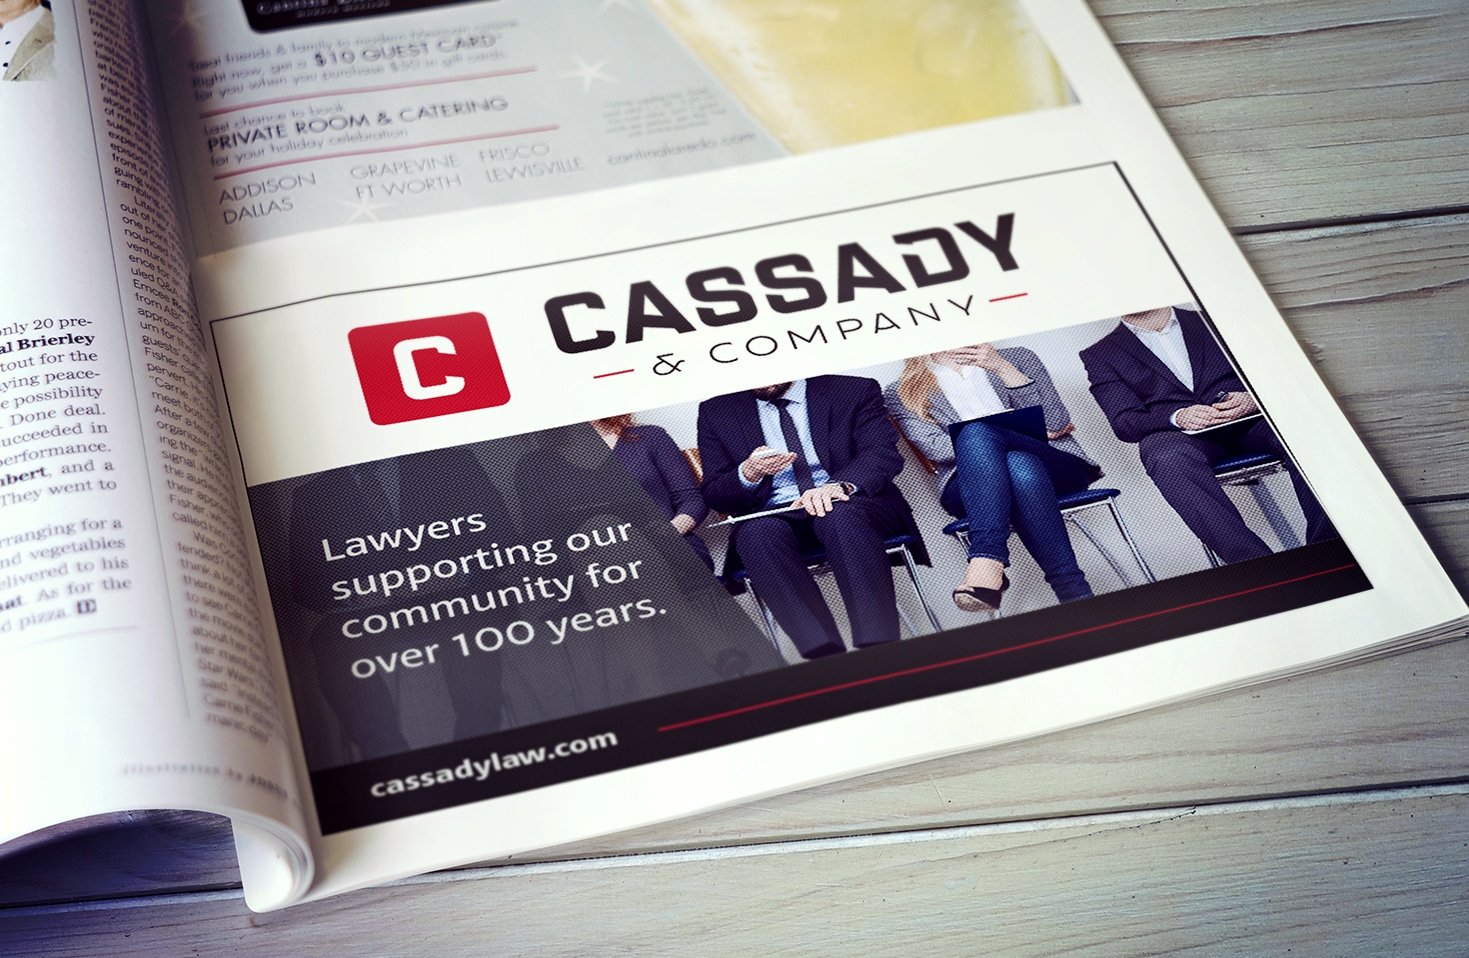 Cassady & Company advertisement